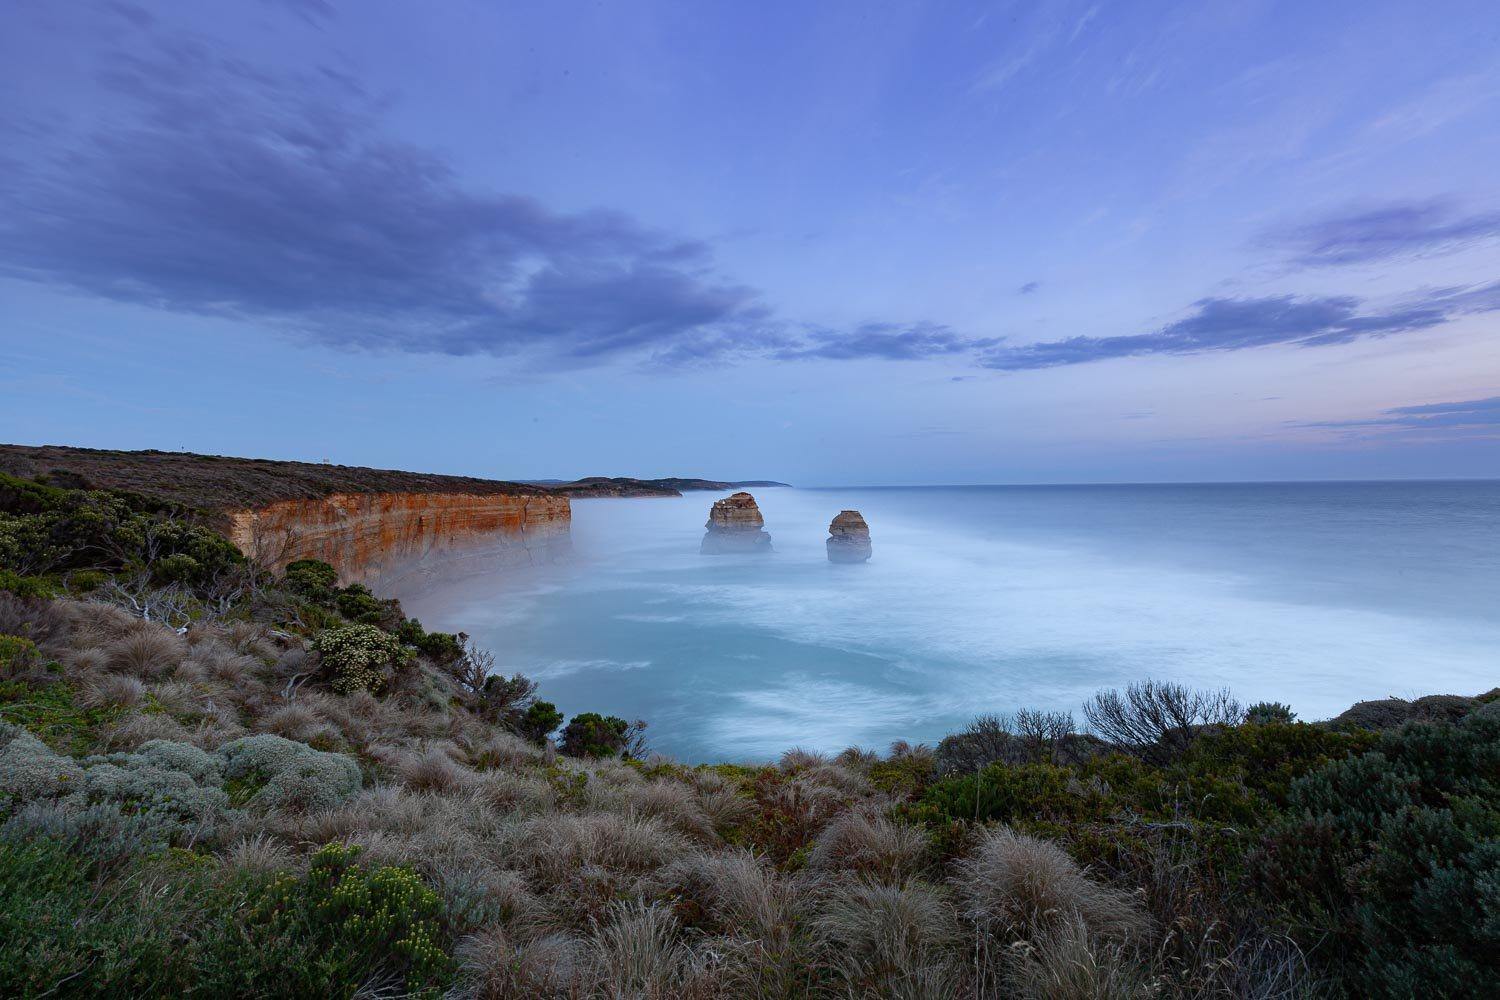 Long-shot of tow standing rocks at the sea shore, Two Apostles - Great Ocean Road VIC